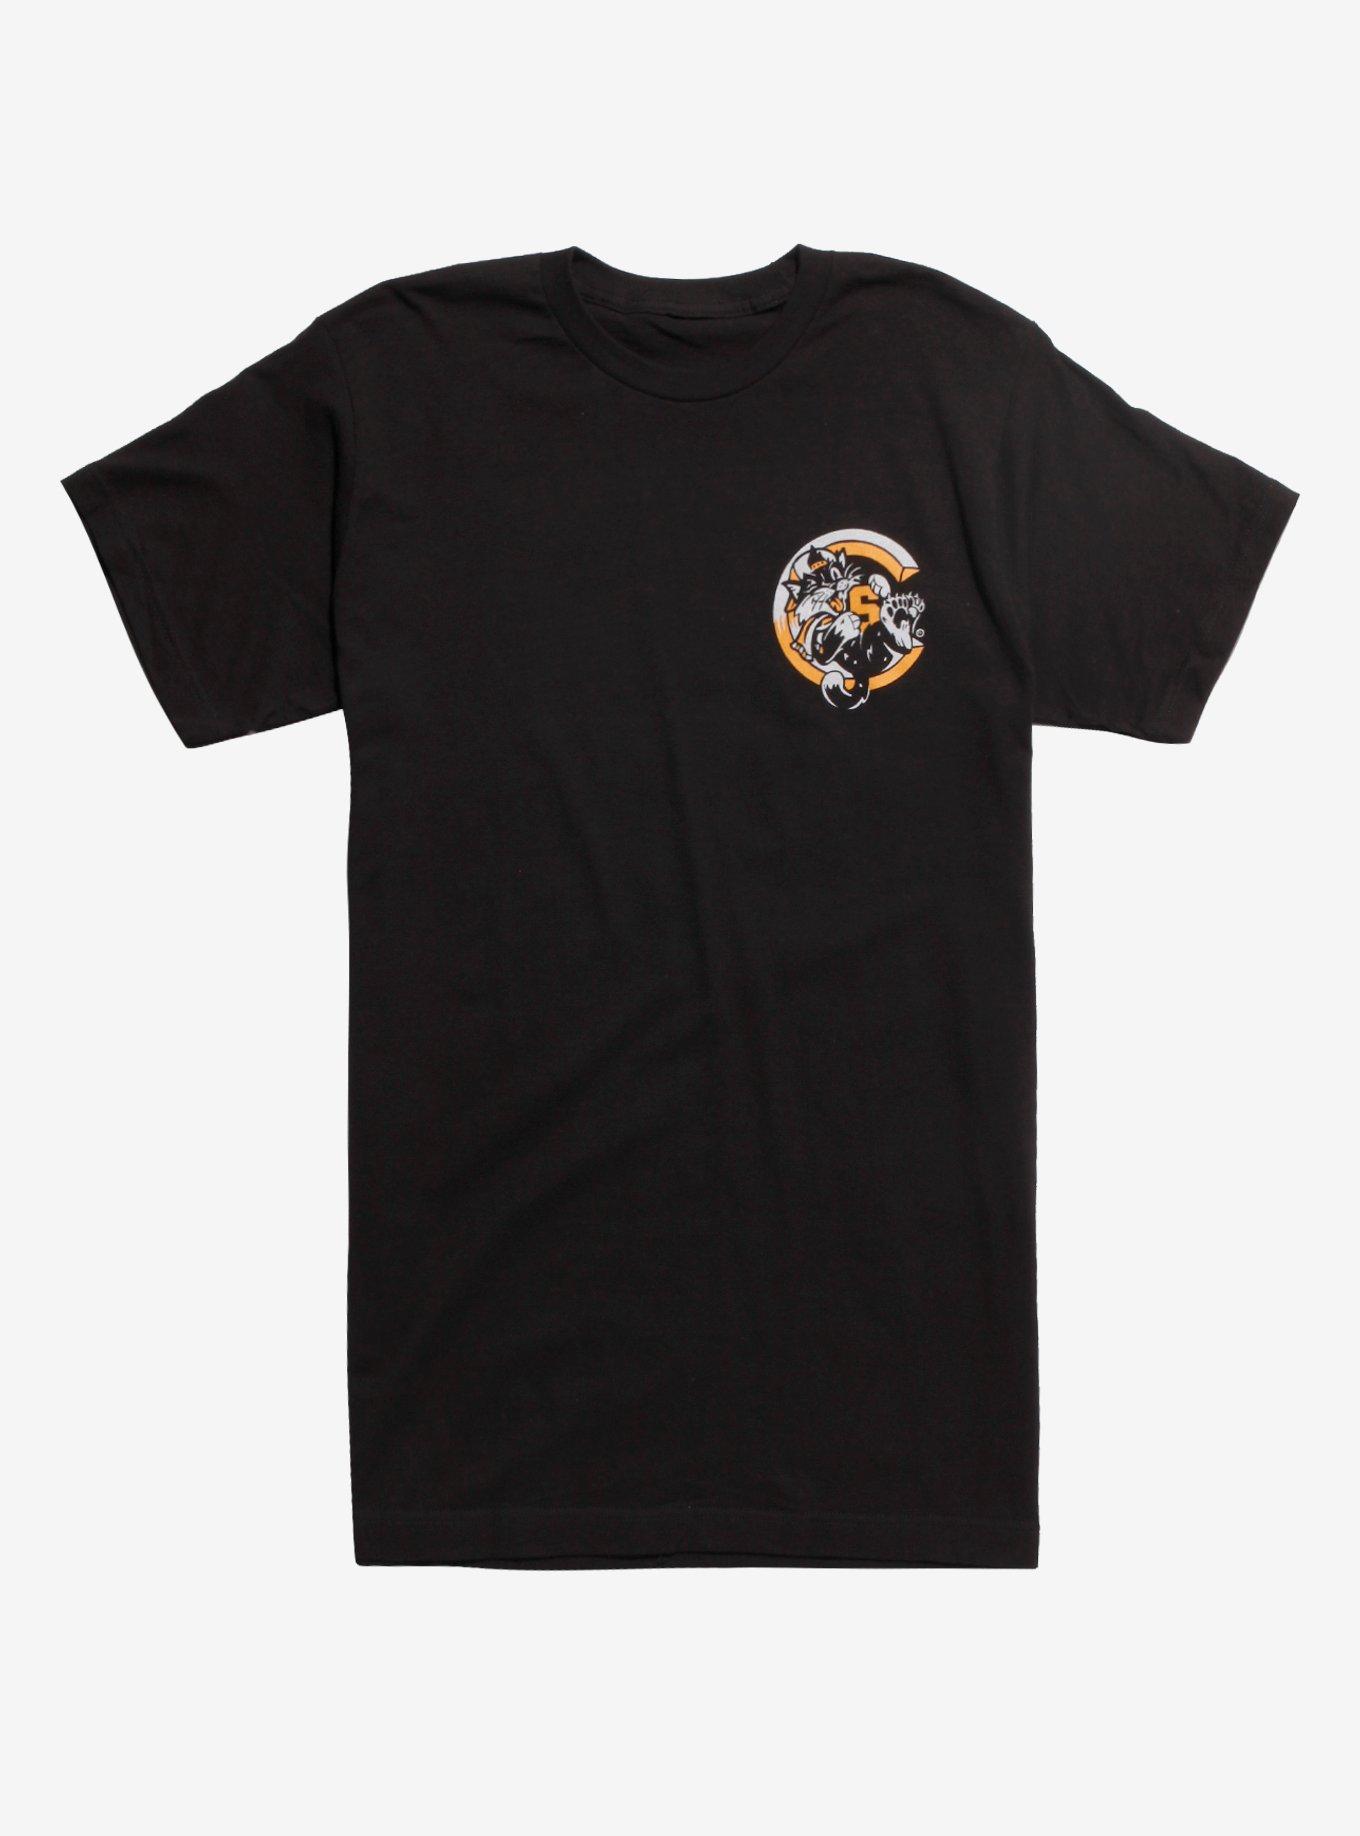 State Champs Black Cat T-Shirt, BLACK, hi-res